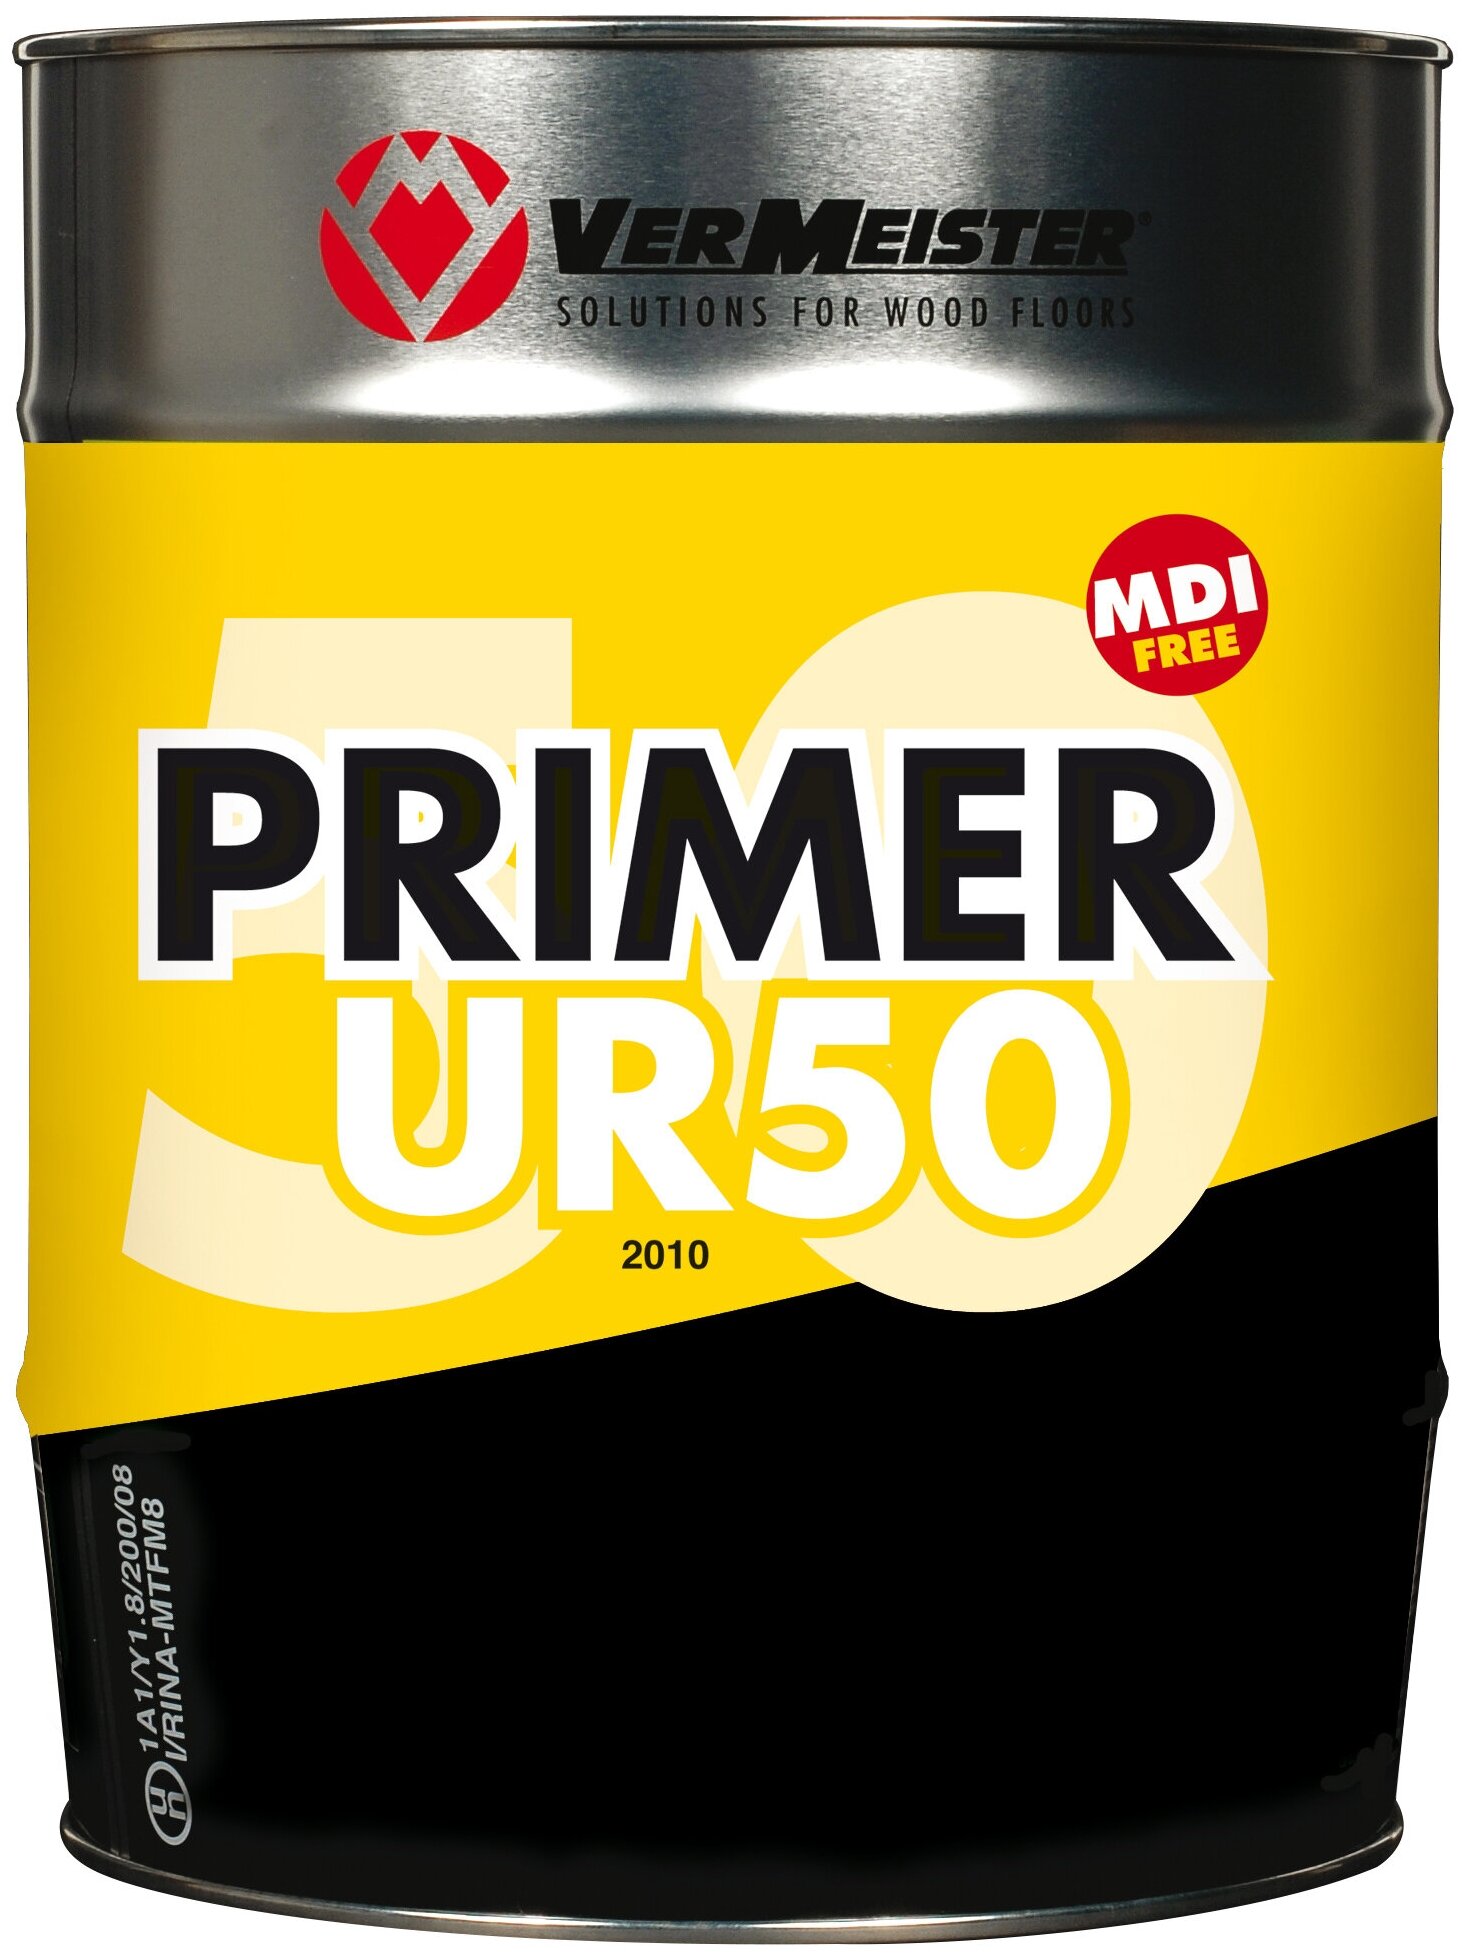 PRIMER UR 50 Vermeister праймер для стяжки 5л.